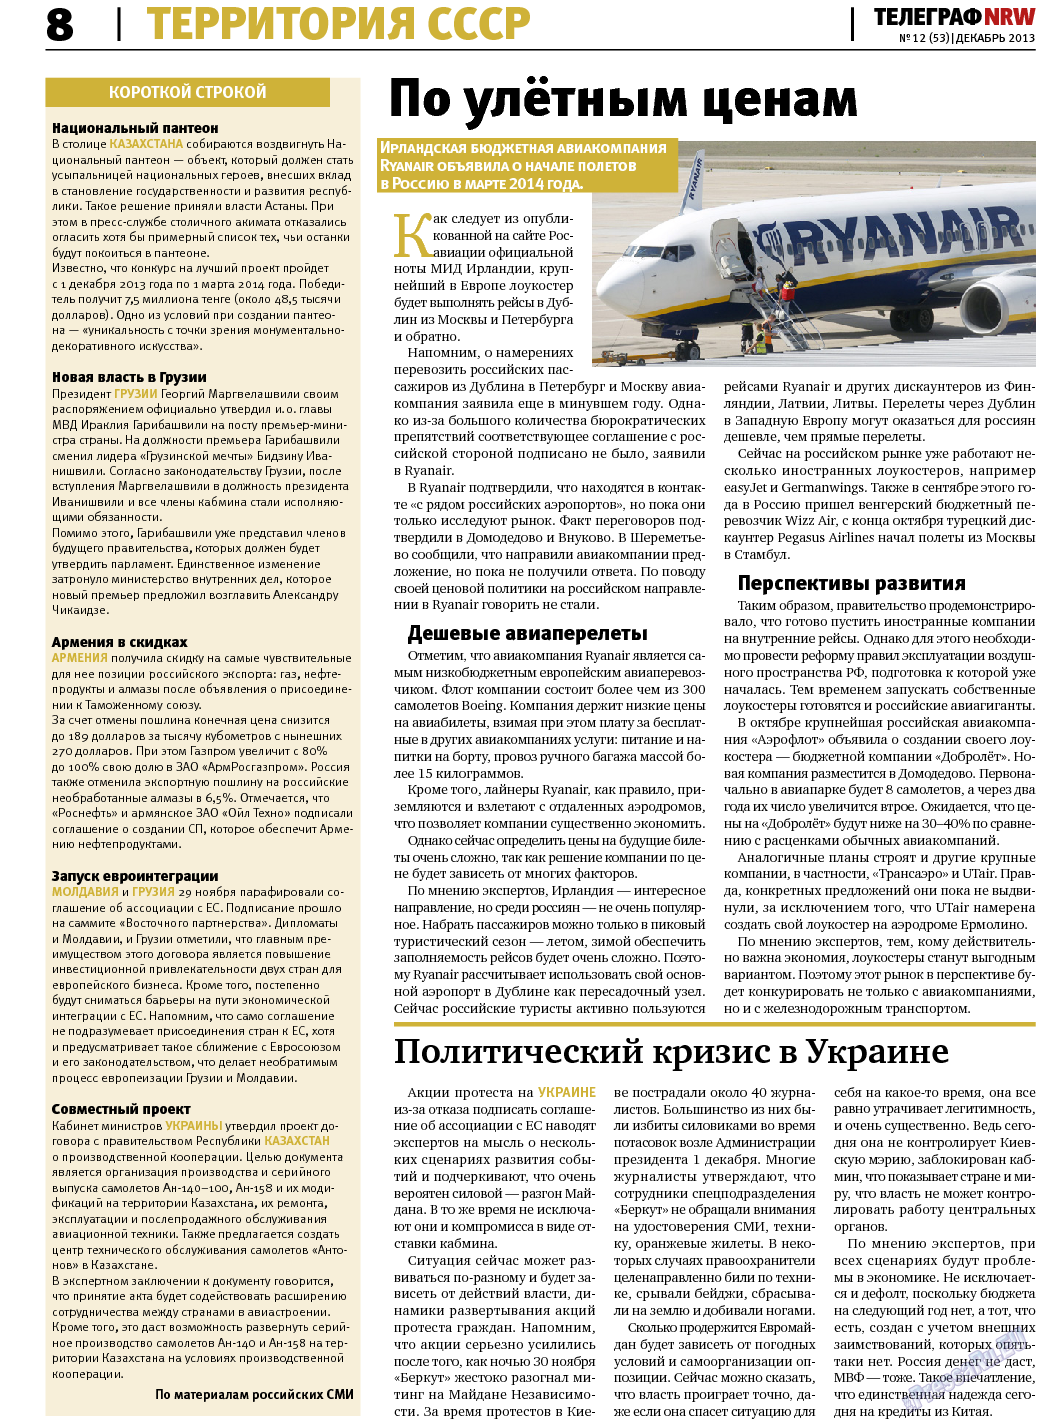 Телеграф NRW, газета. 2013 №12 стр.8